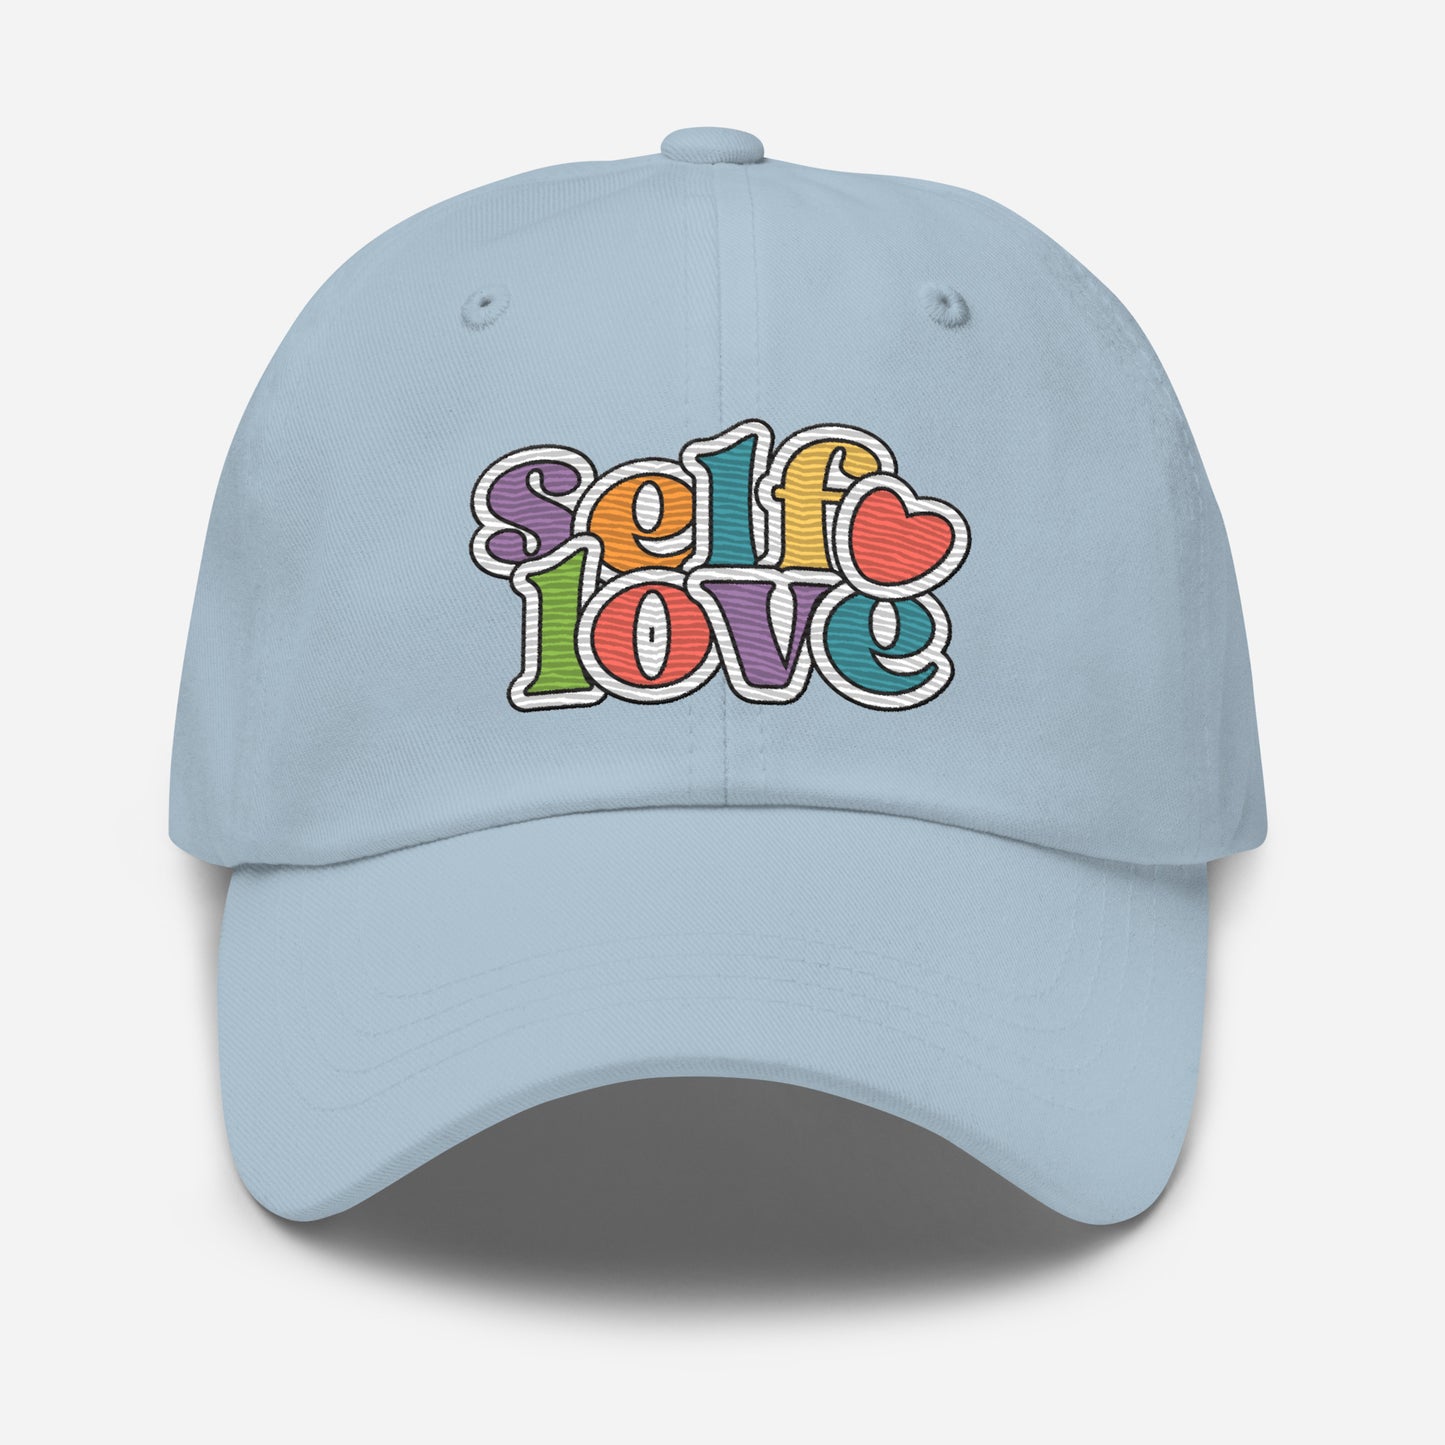 Self Love - Dad Hat